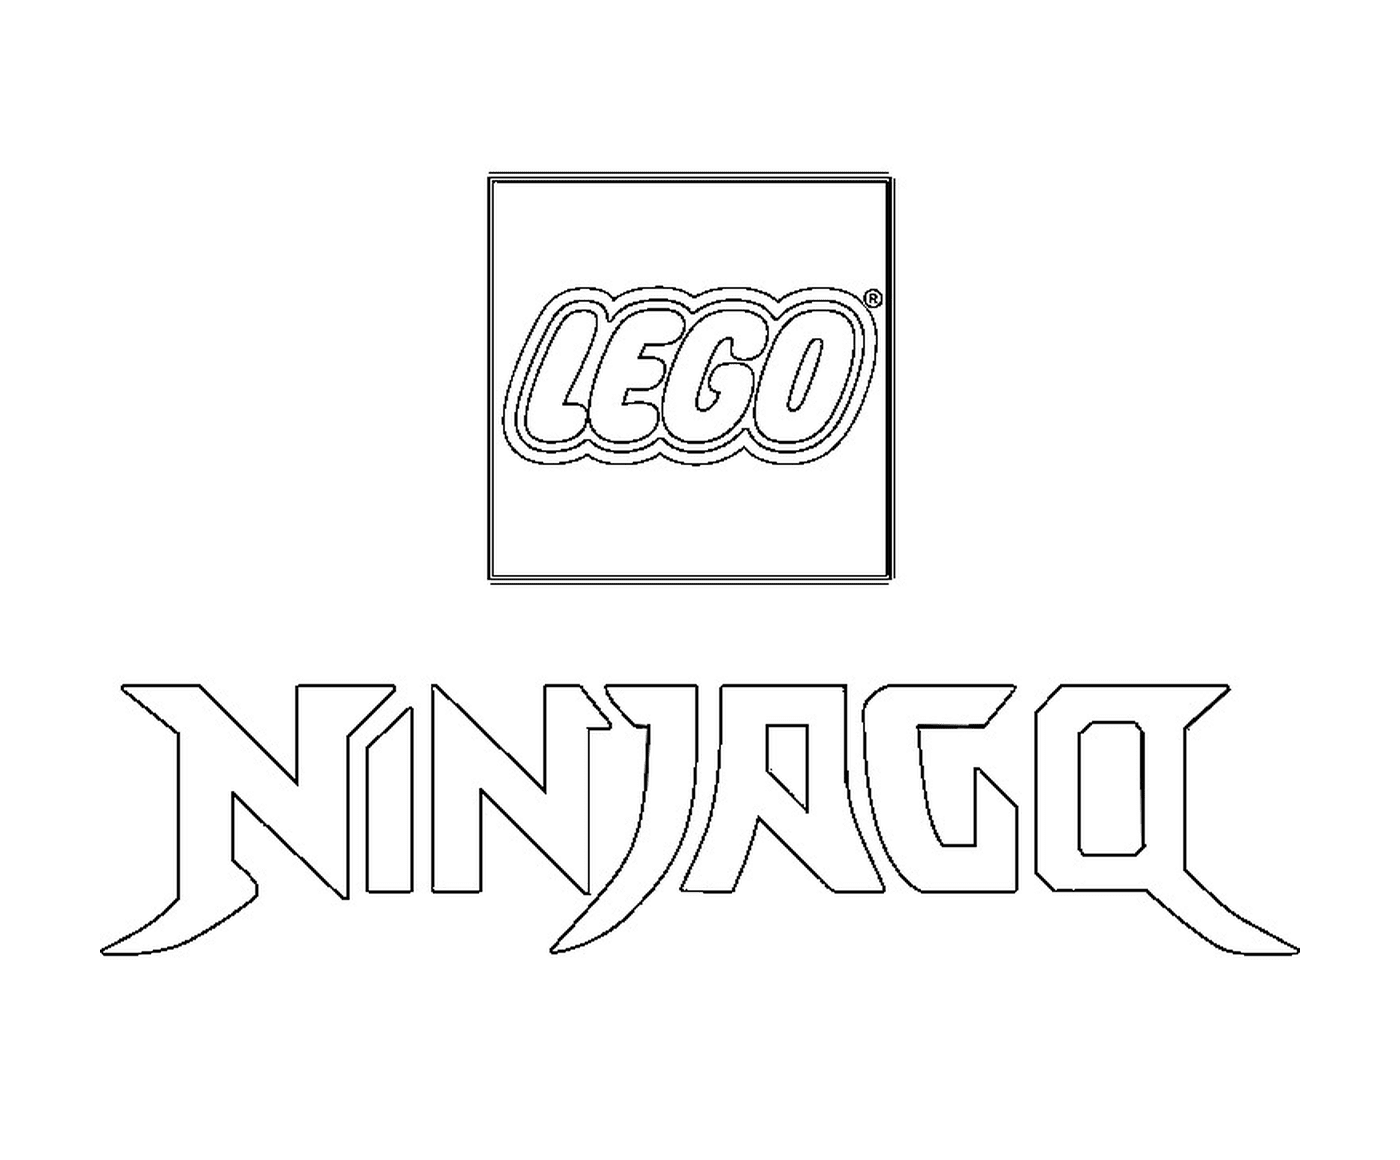   Logo ninjago 